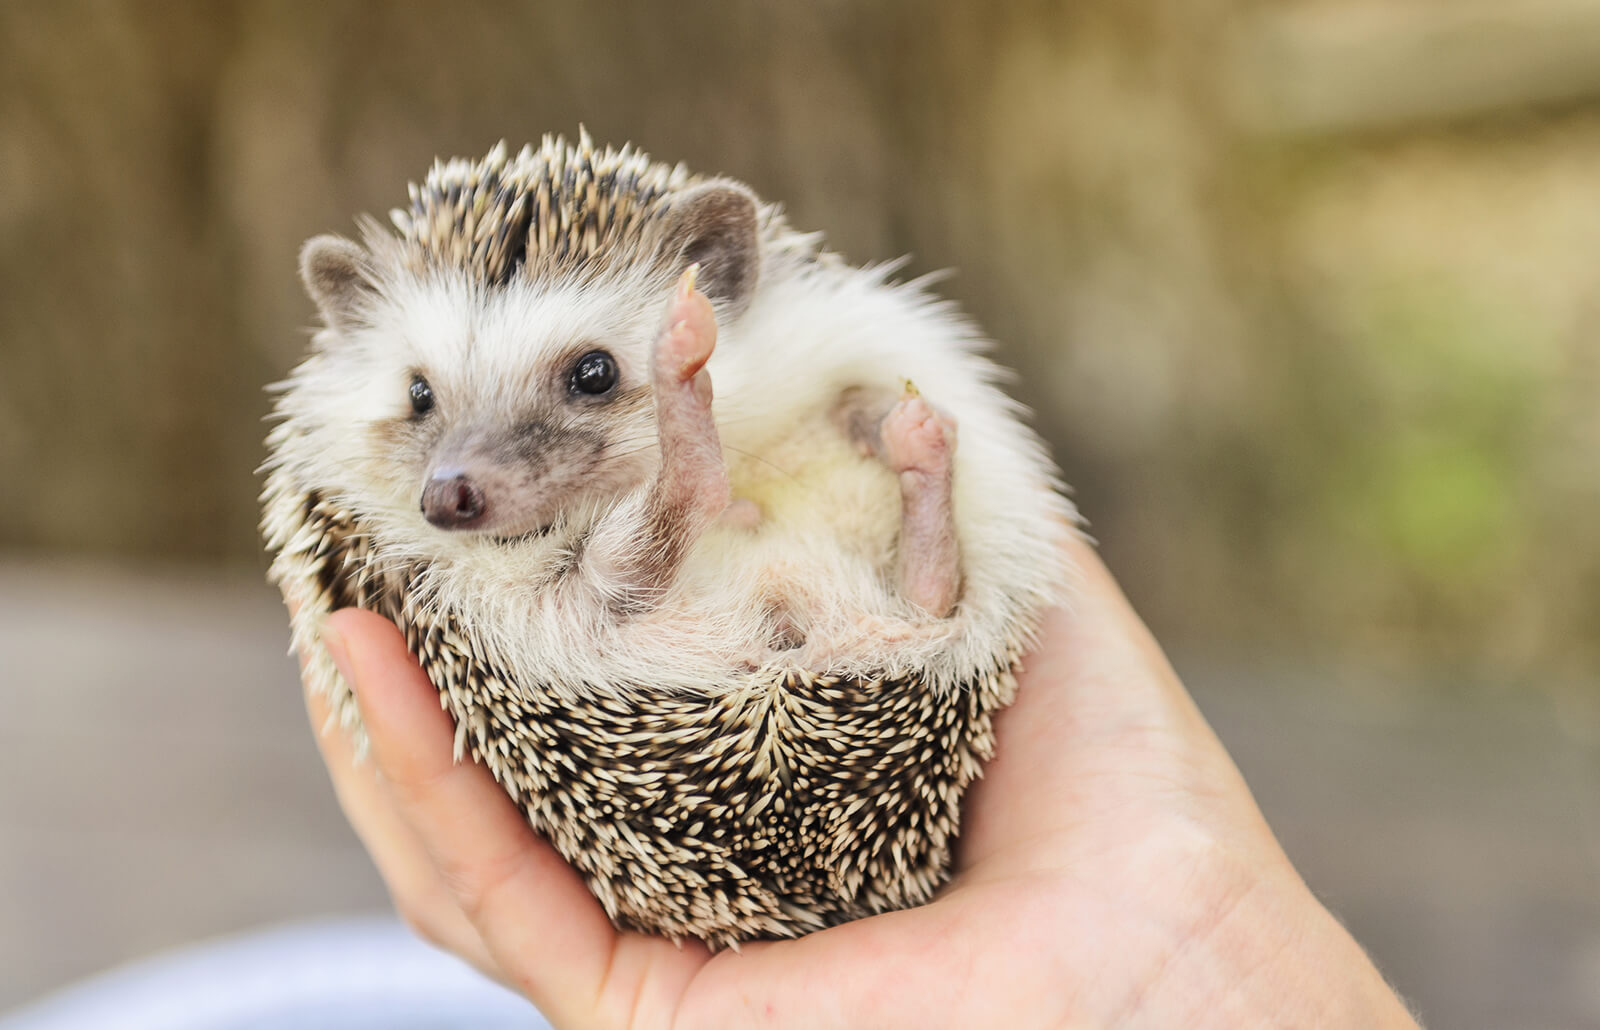 Baby Hedgehog Image